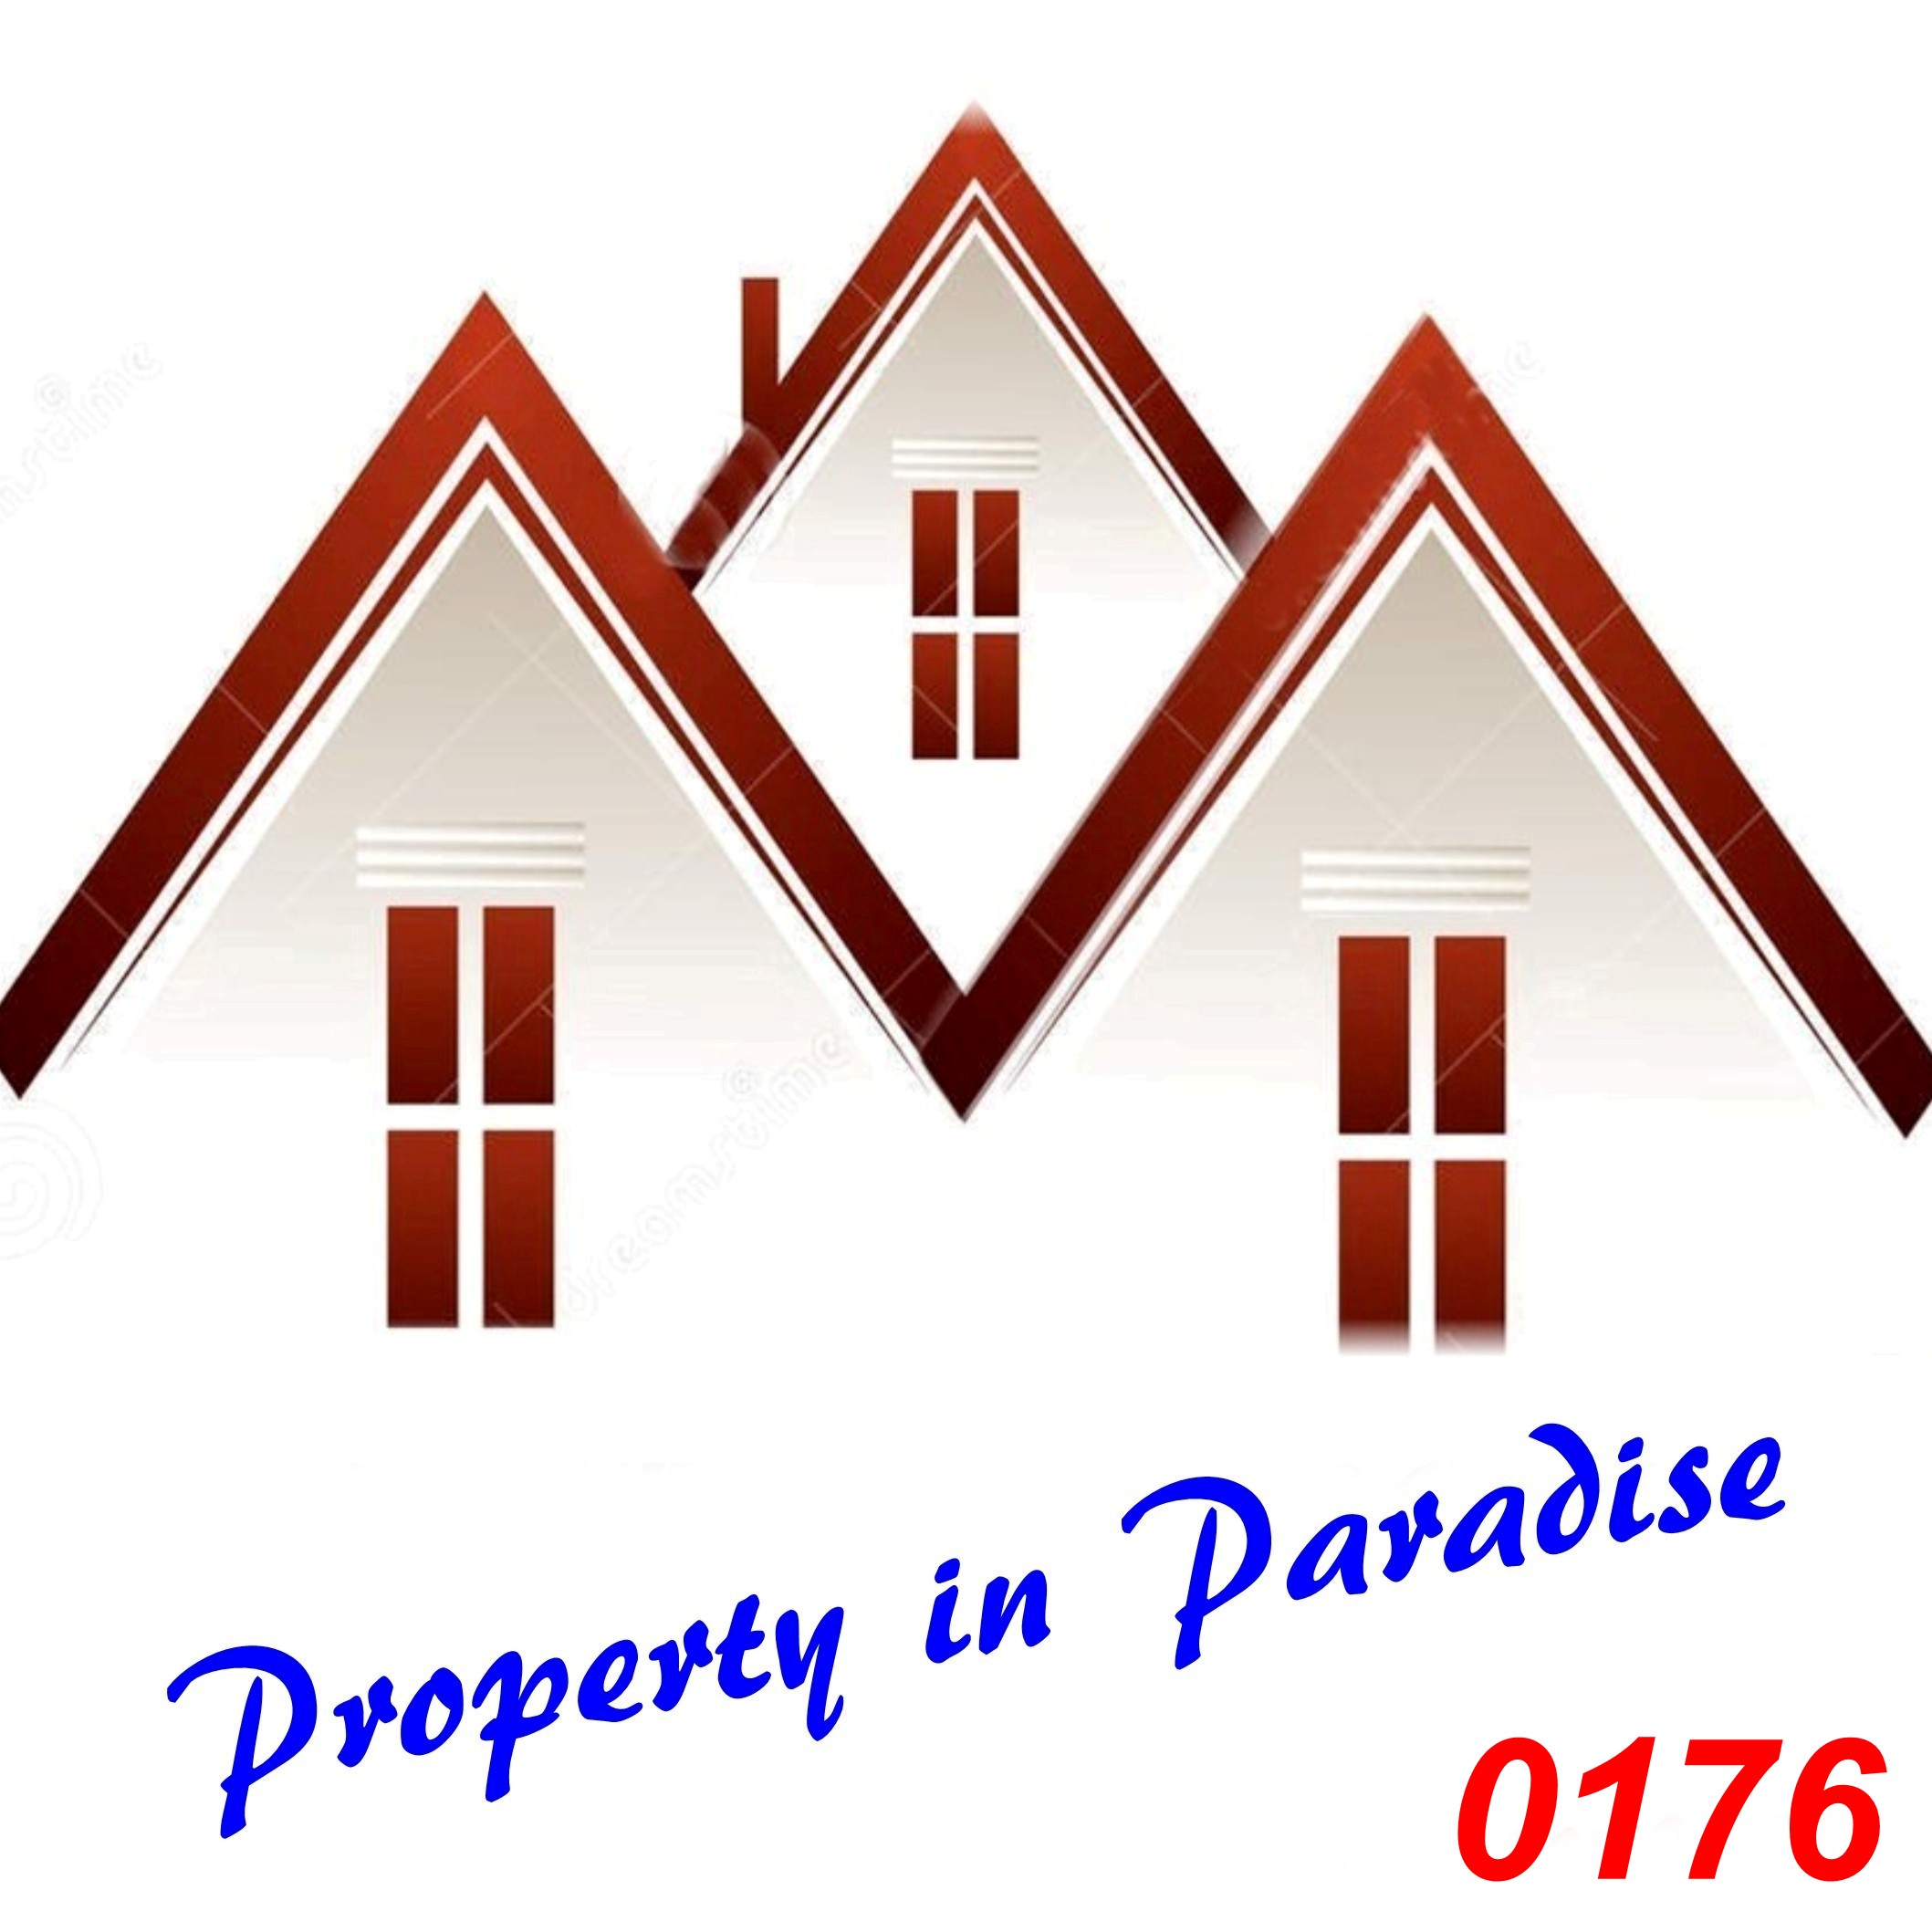 Nadi Property Managers Pte Ltd